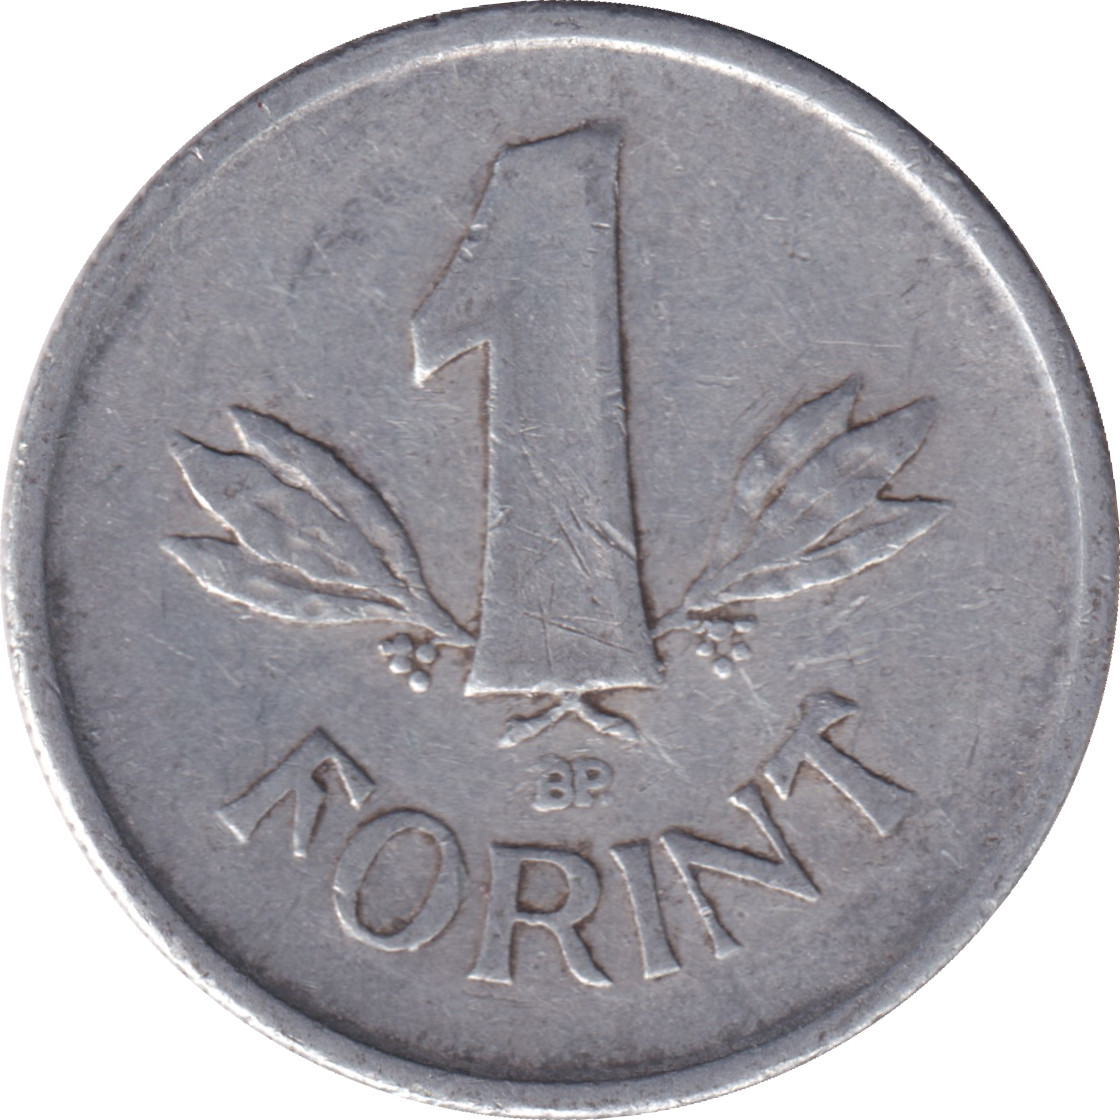 1 forint - Shield of Republic